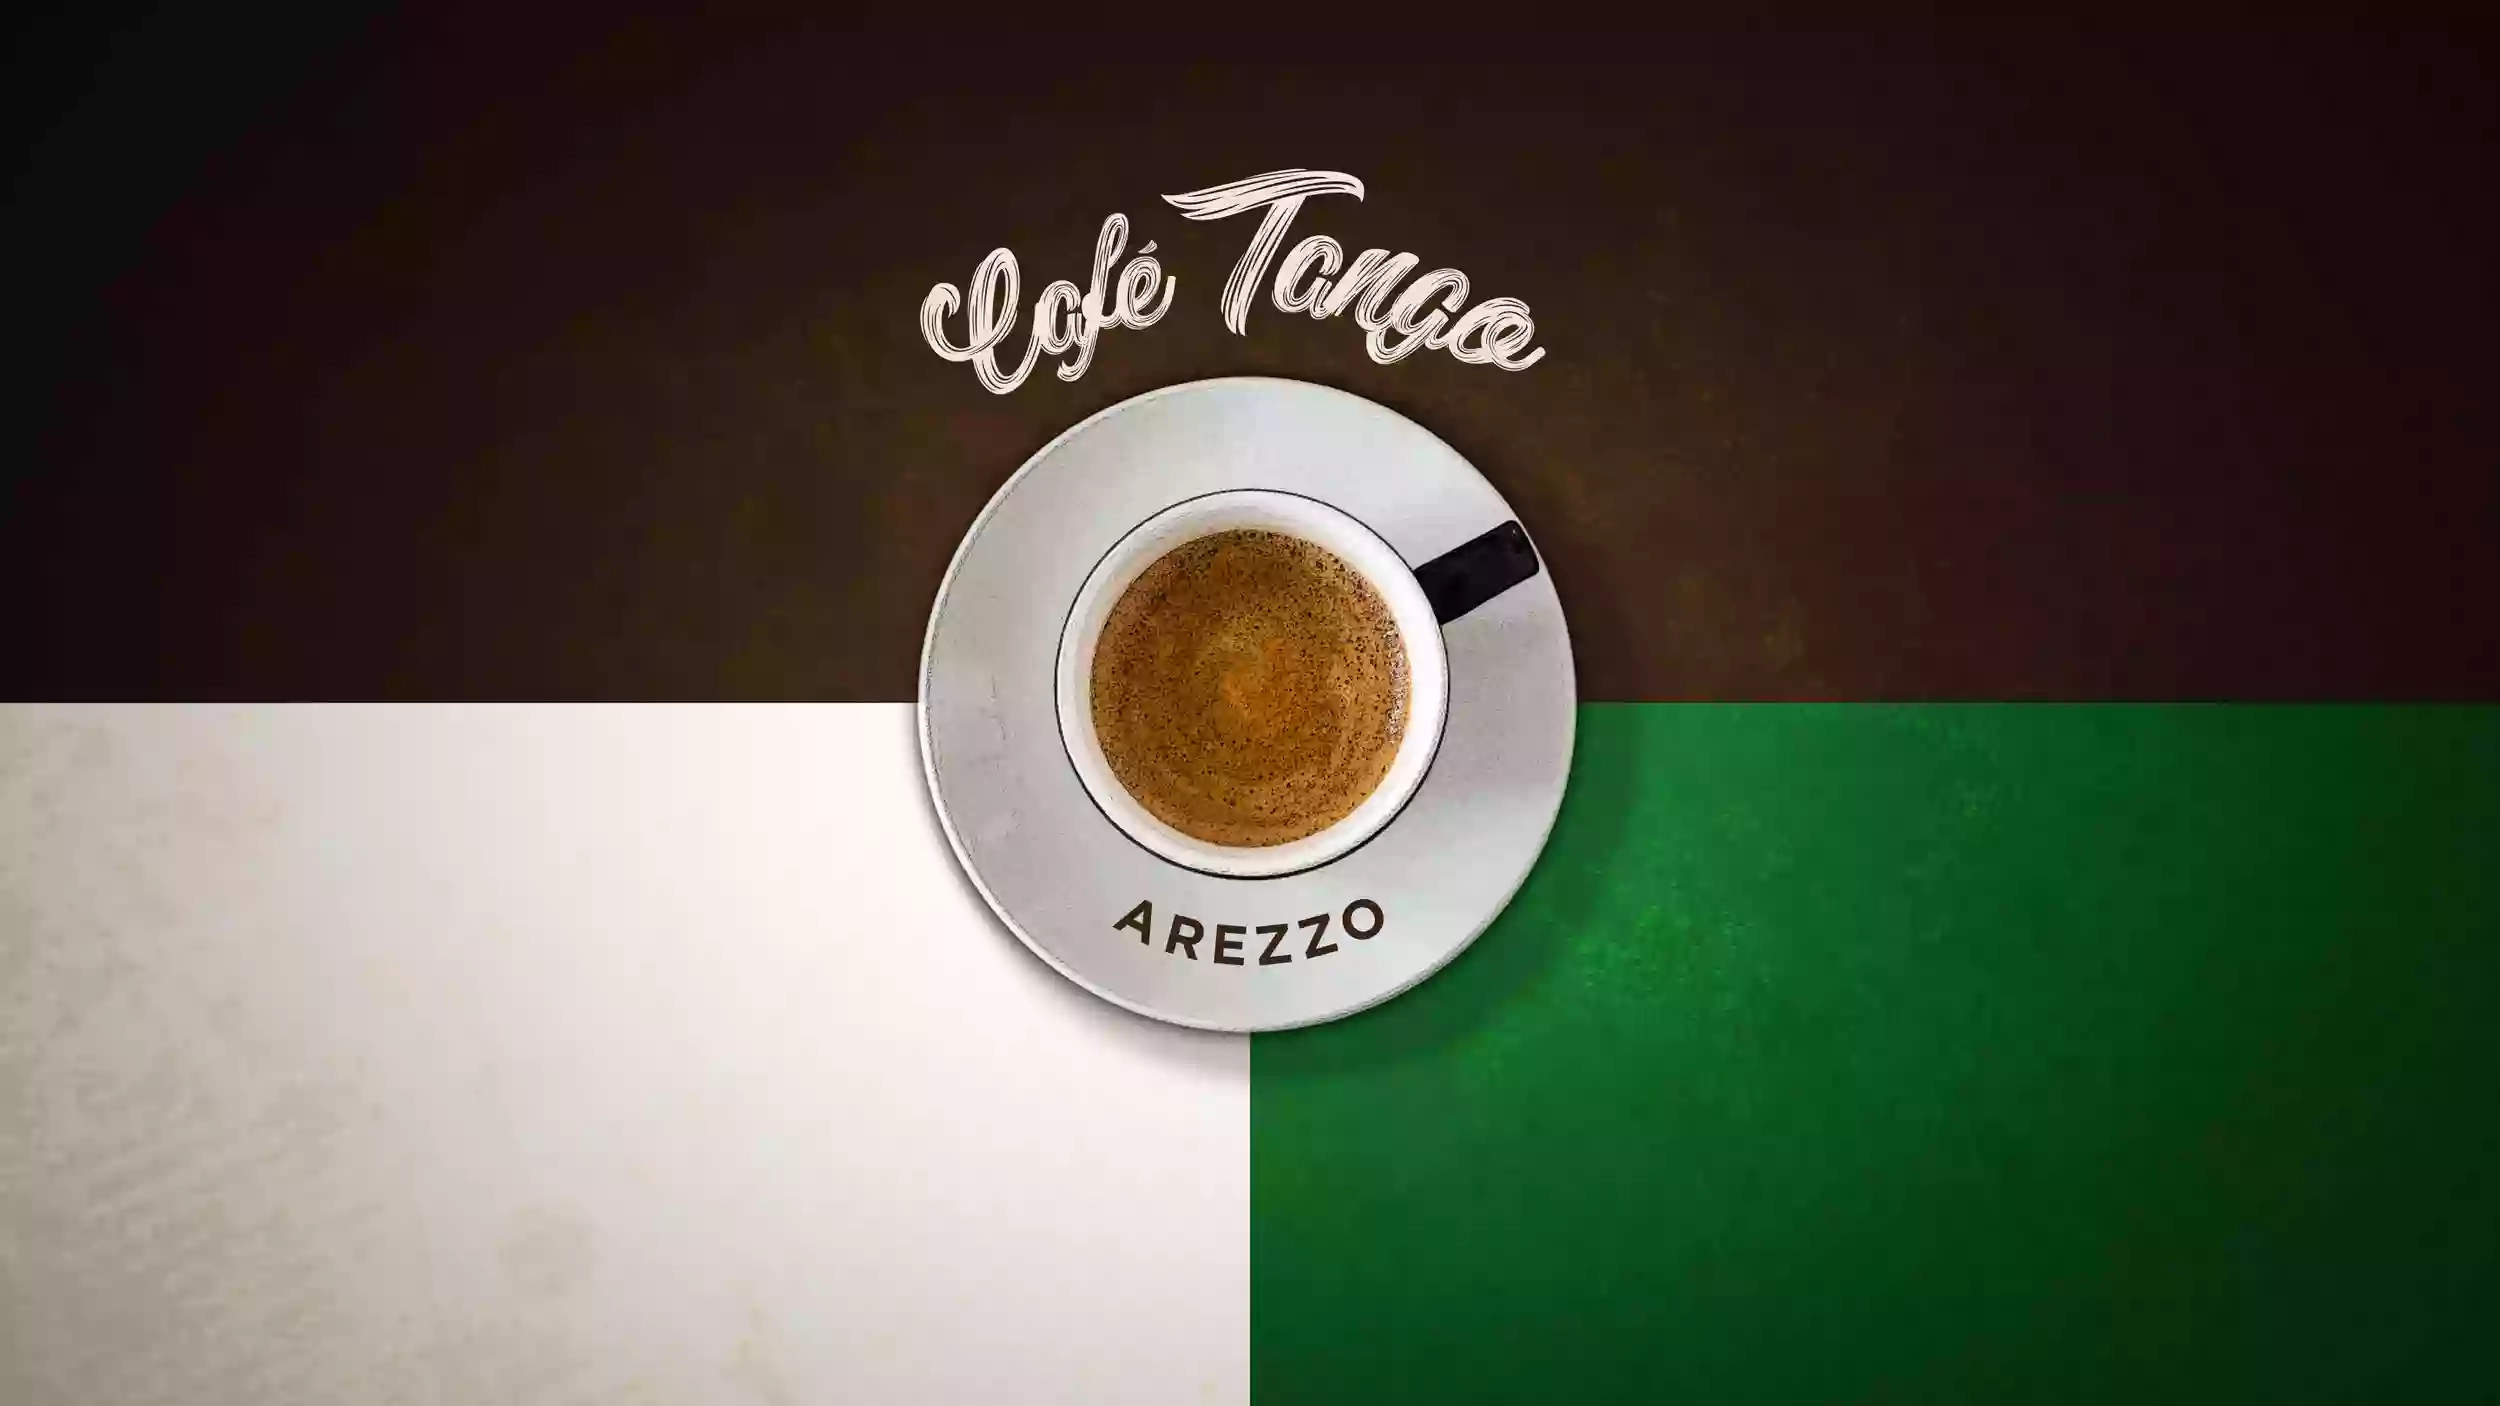 Café Tango Arezzo